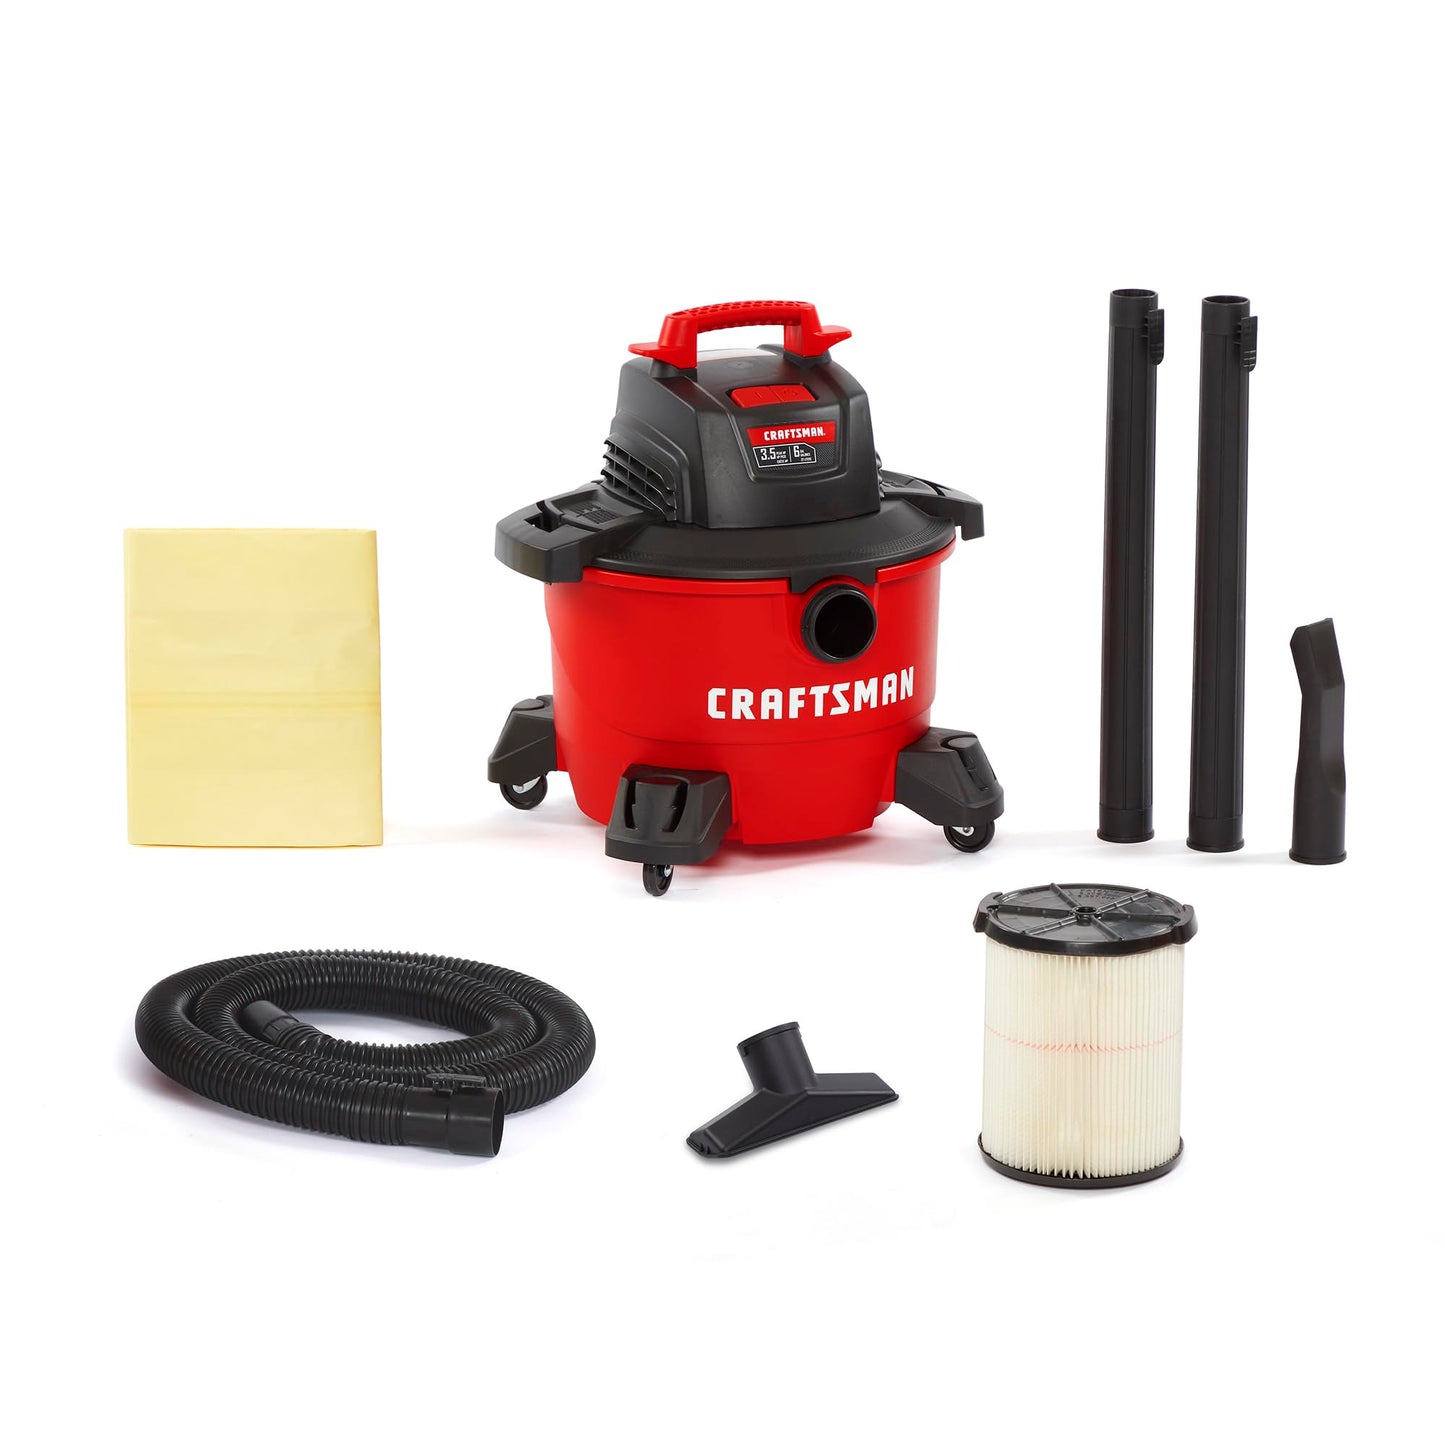 CRAFTSMAN CMXEVBE17584 6 Gallon 3.5 Peak HP Wet/Dry Vac, Portable Shop Vacuum with Attachments